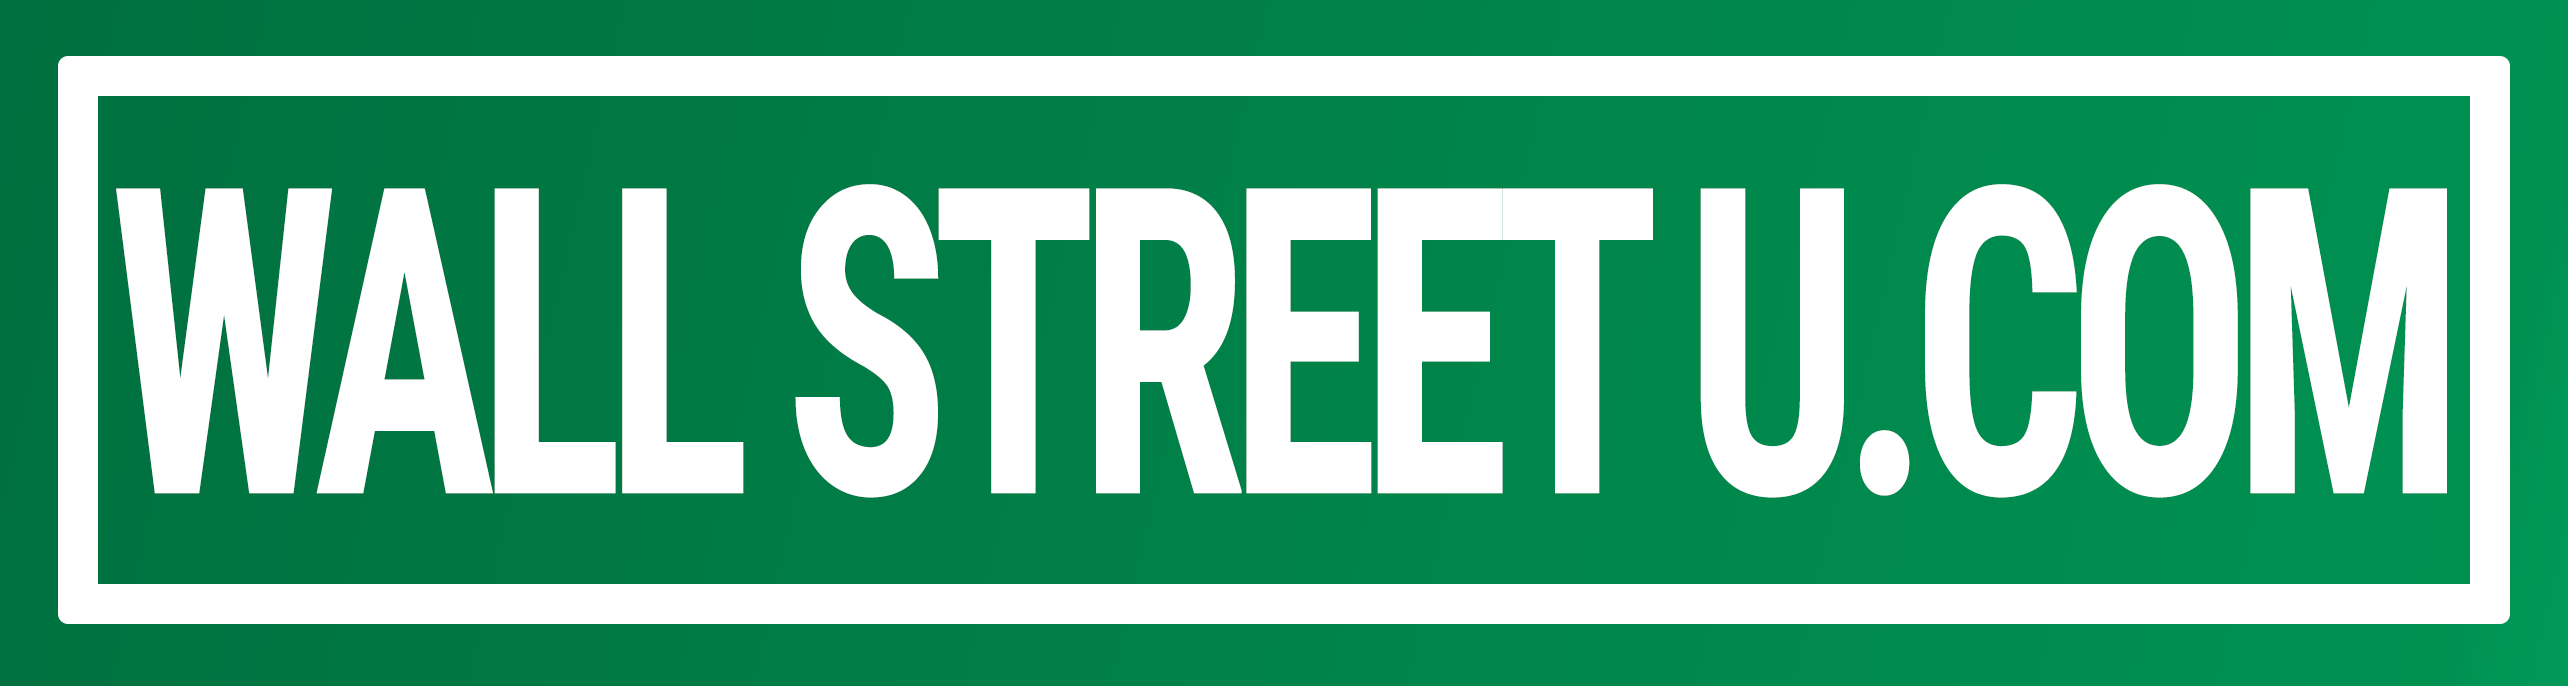 WallStreetU Educational Source For Trading Stocks, Options & Futures logo